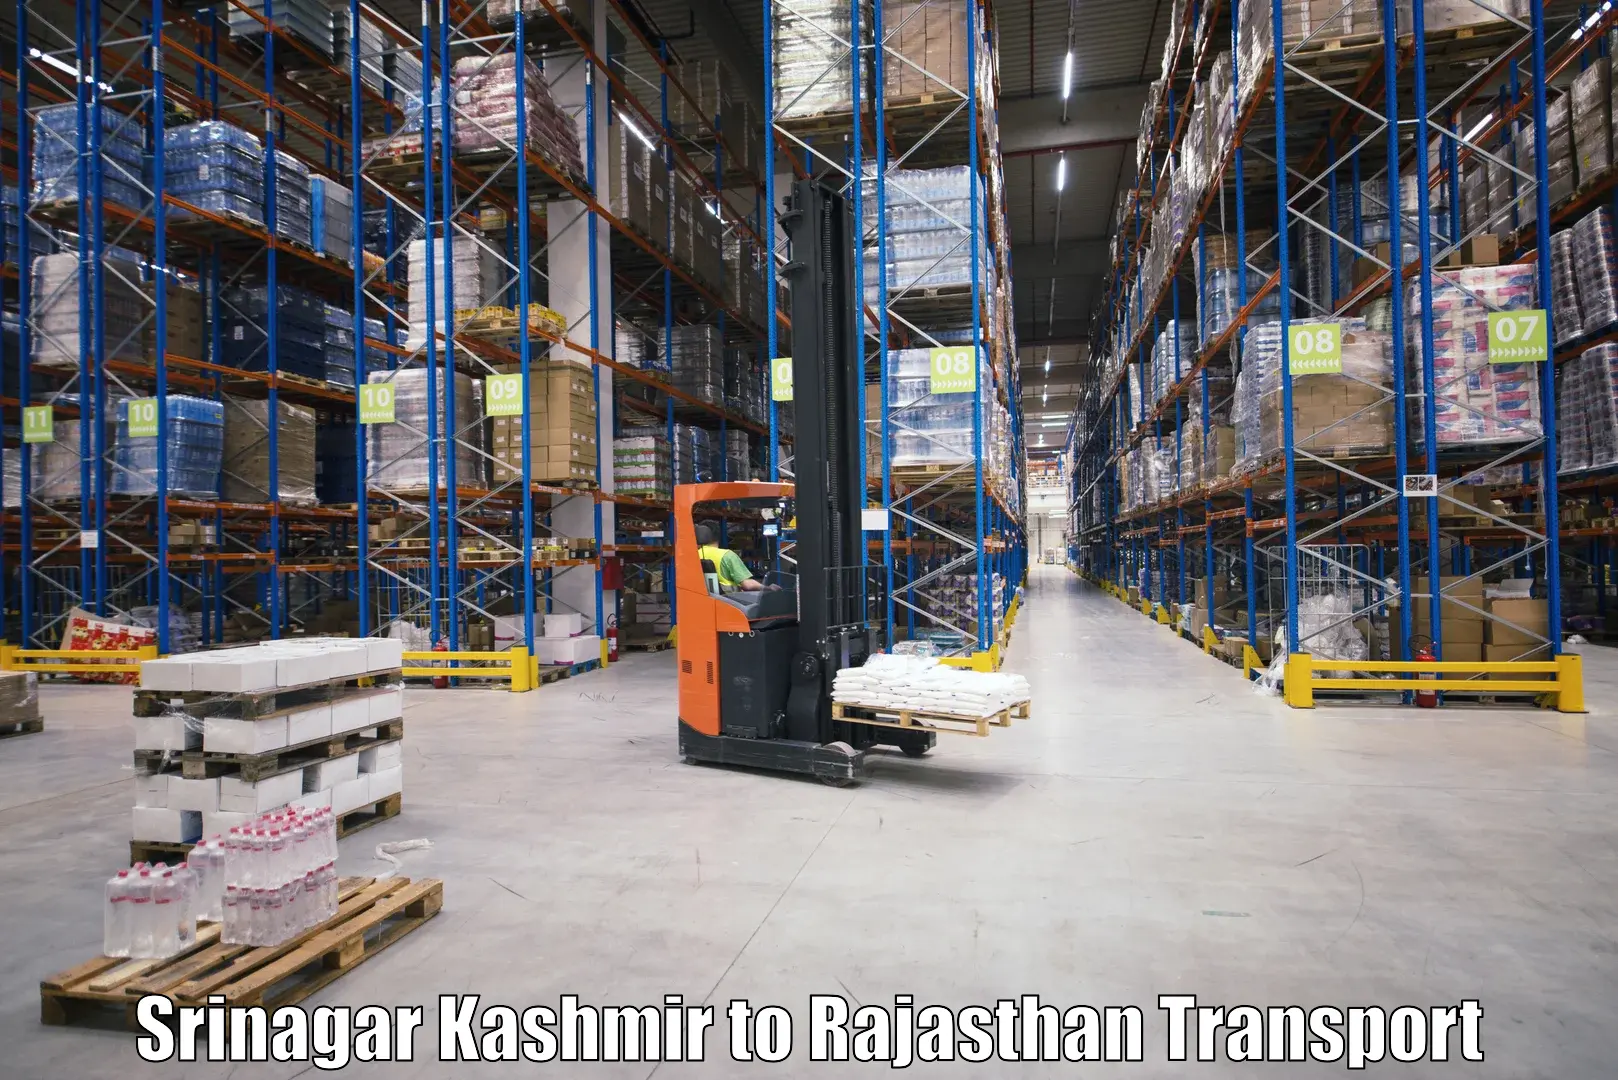 Goods delivery service Srinagar Kashmir to Mandalgarh